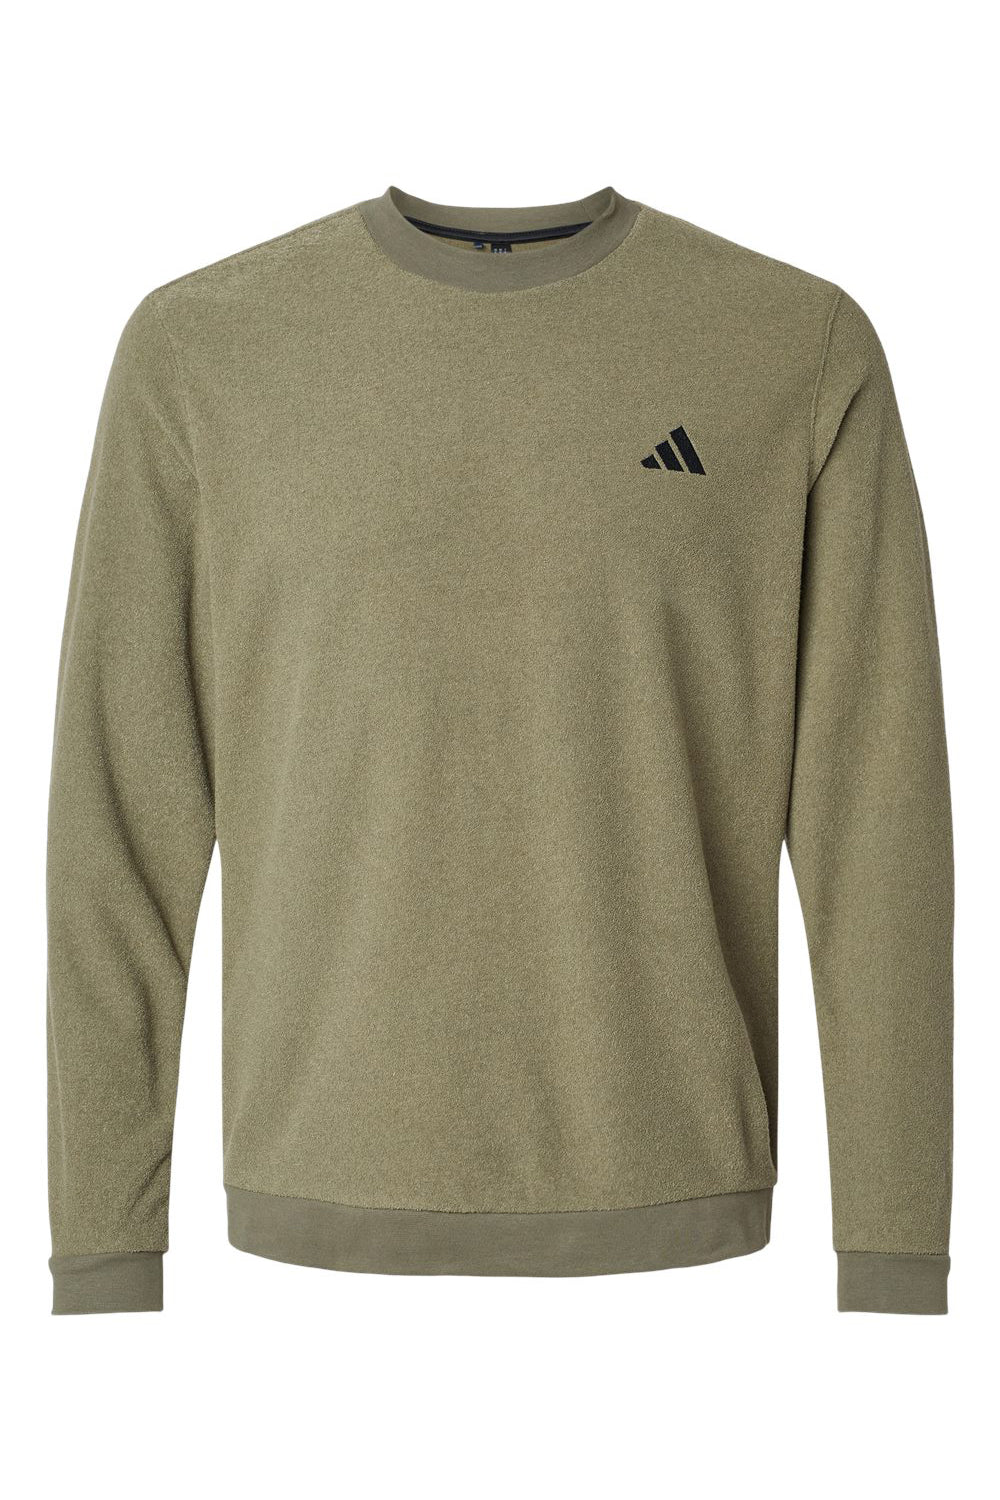 Adidas A586 Mens Crewneck Sweatshirt Olive Strata Flat Front